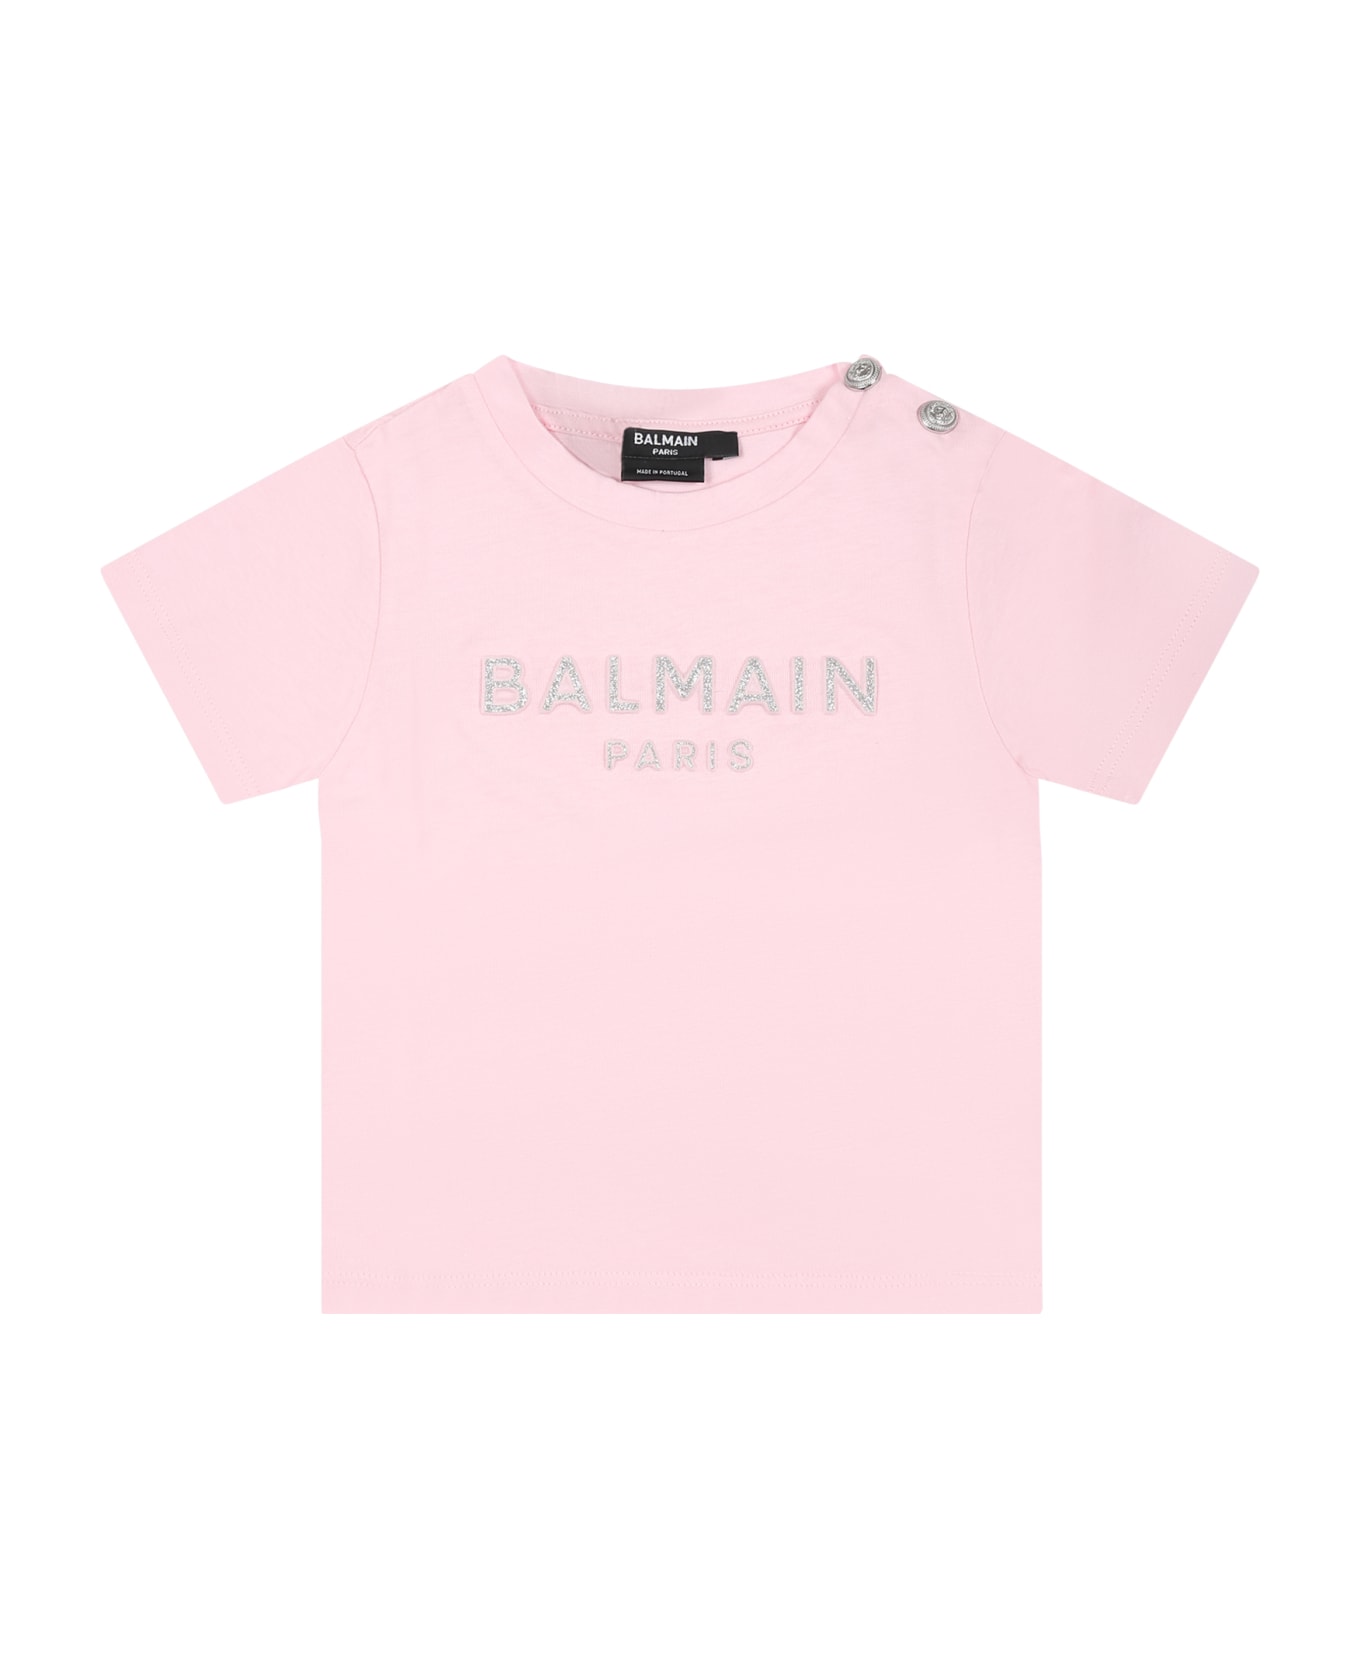 Balmain Pink T-shirt For Baby Girl With Logo - Pink